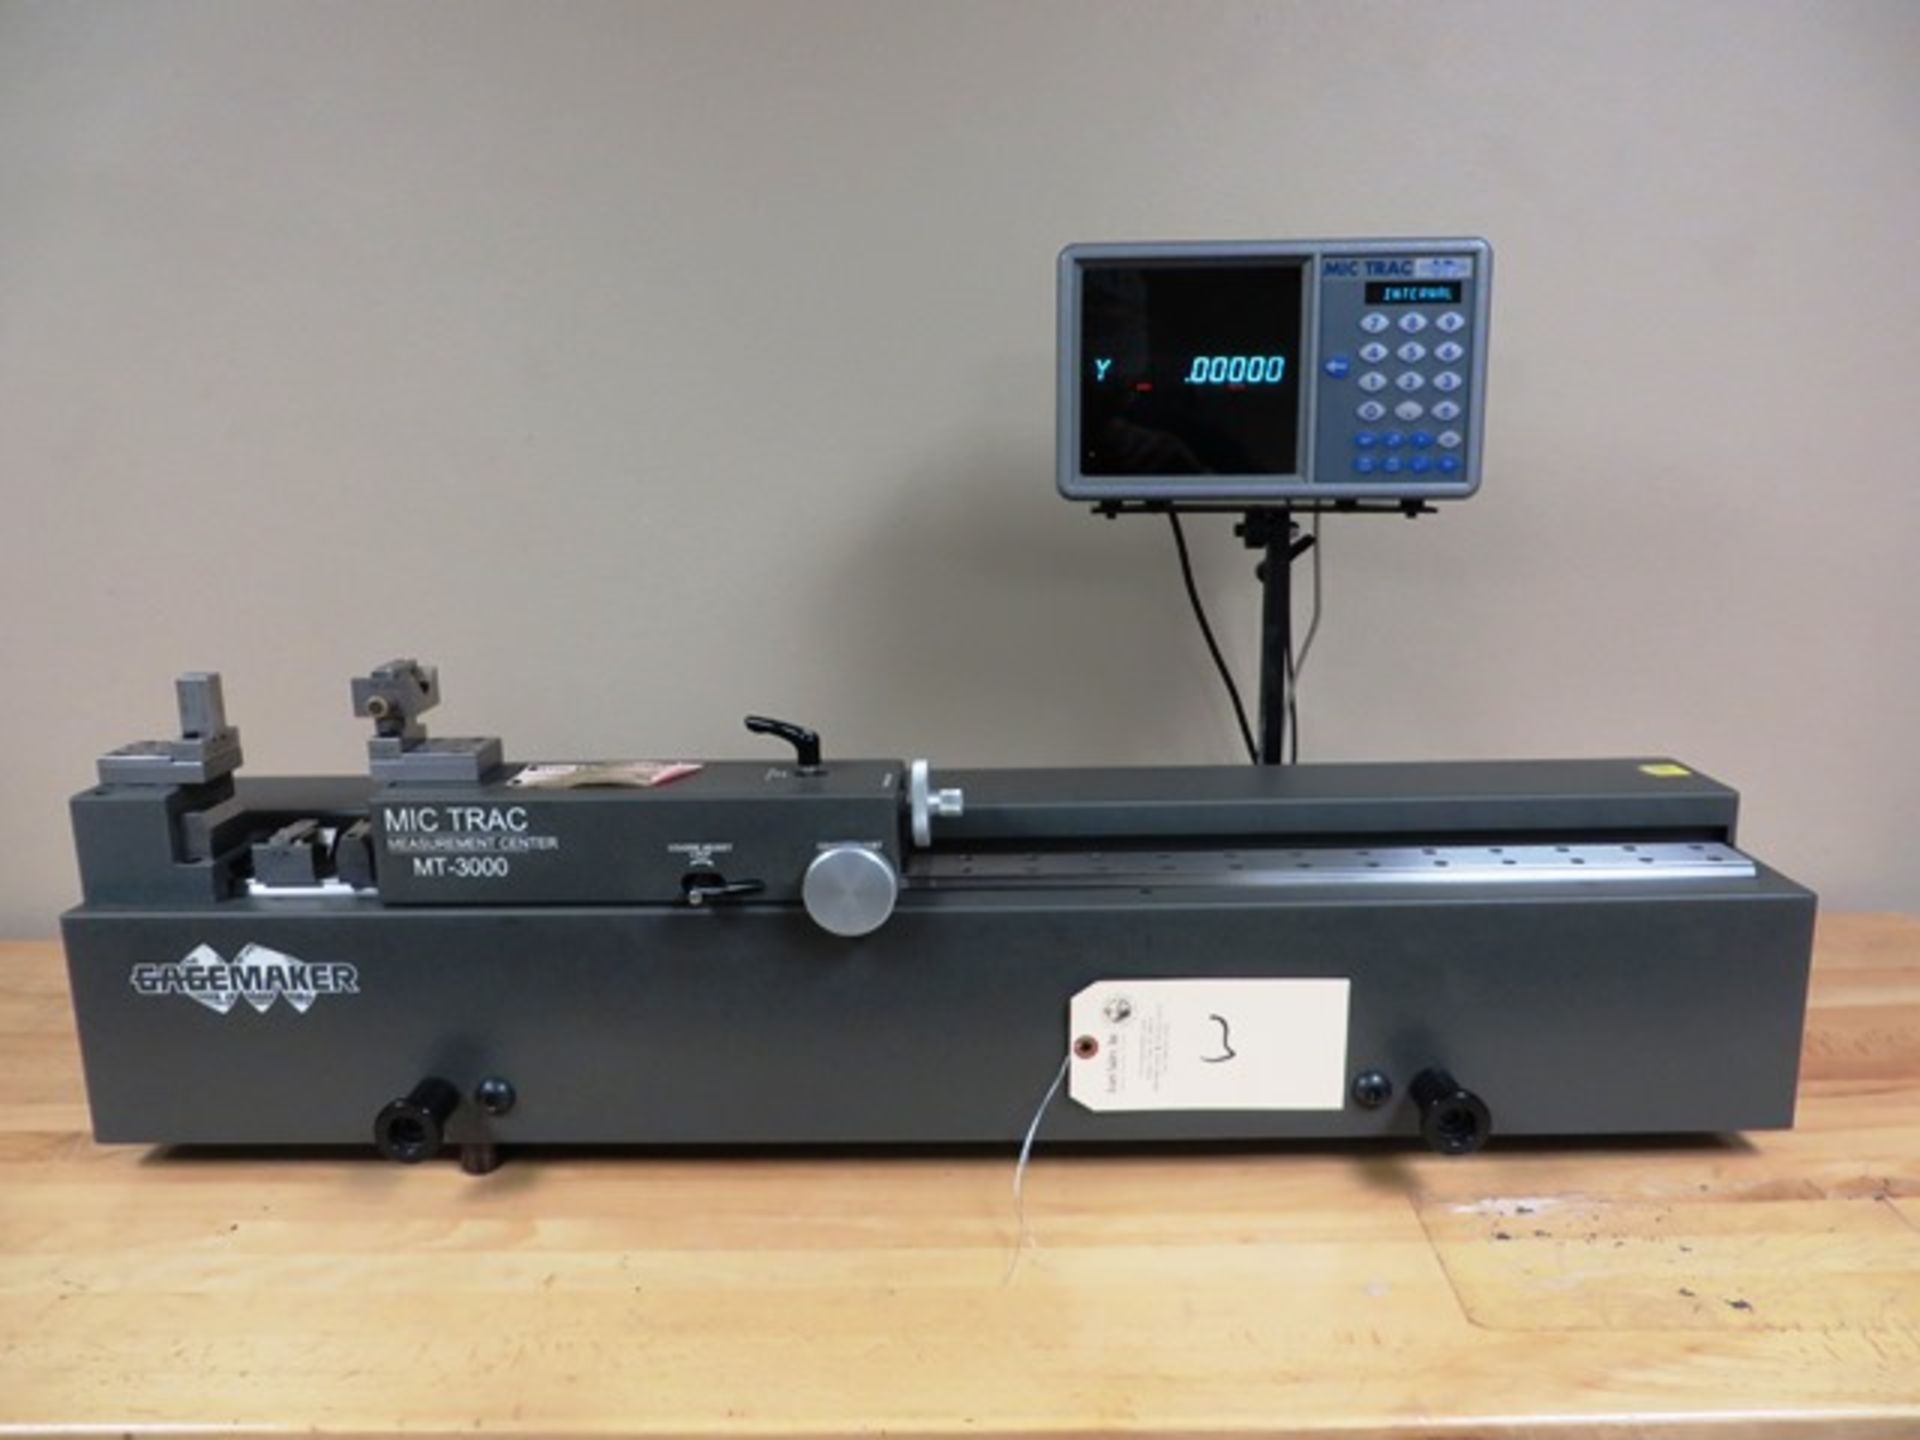 2012 Gagemaker Mic Trac MT 3000 Calibration & Measuring System